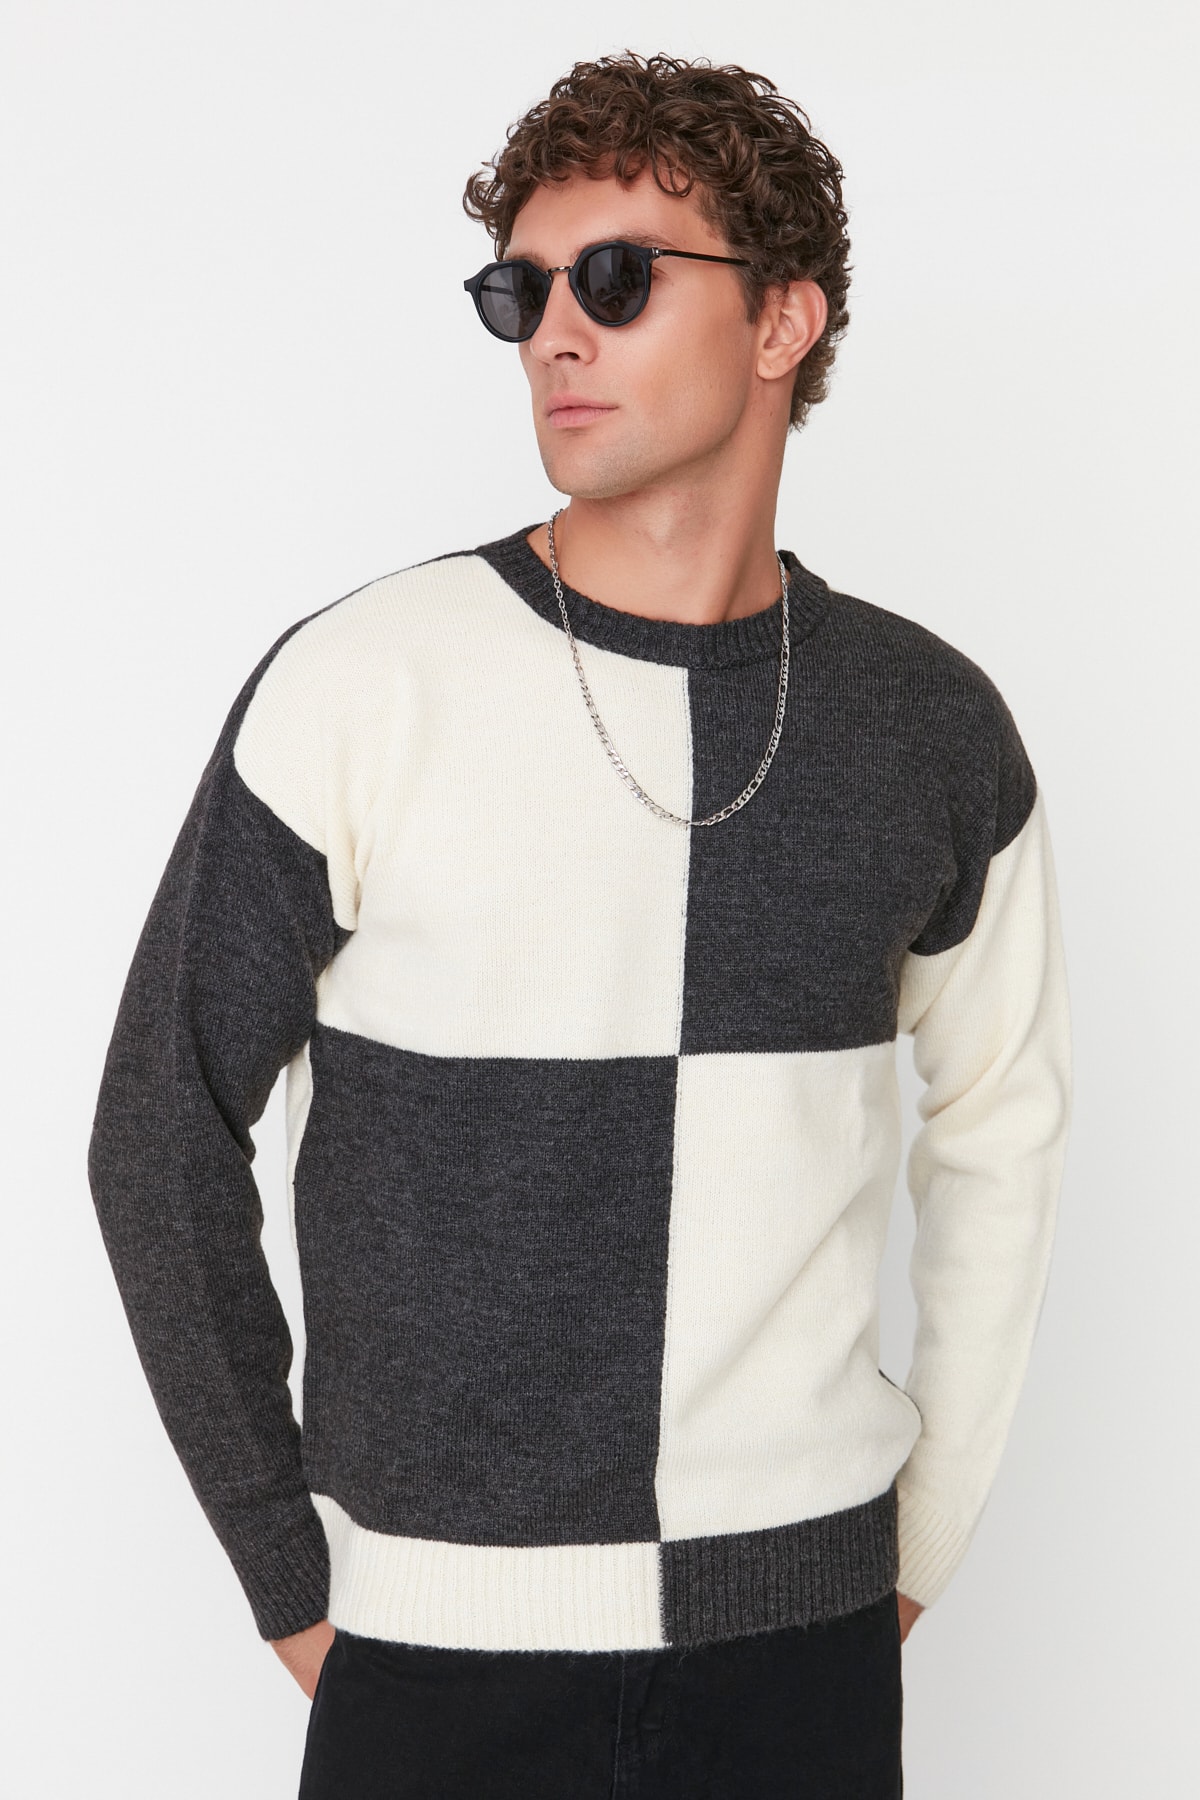 Trendyol Ecru - Anthracite Men's Oversize Fit Wide Fit Crew Neck Color Block Knitwear Sweater